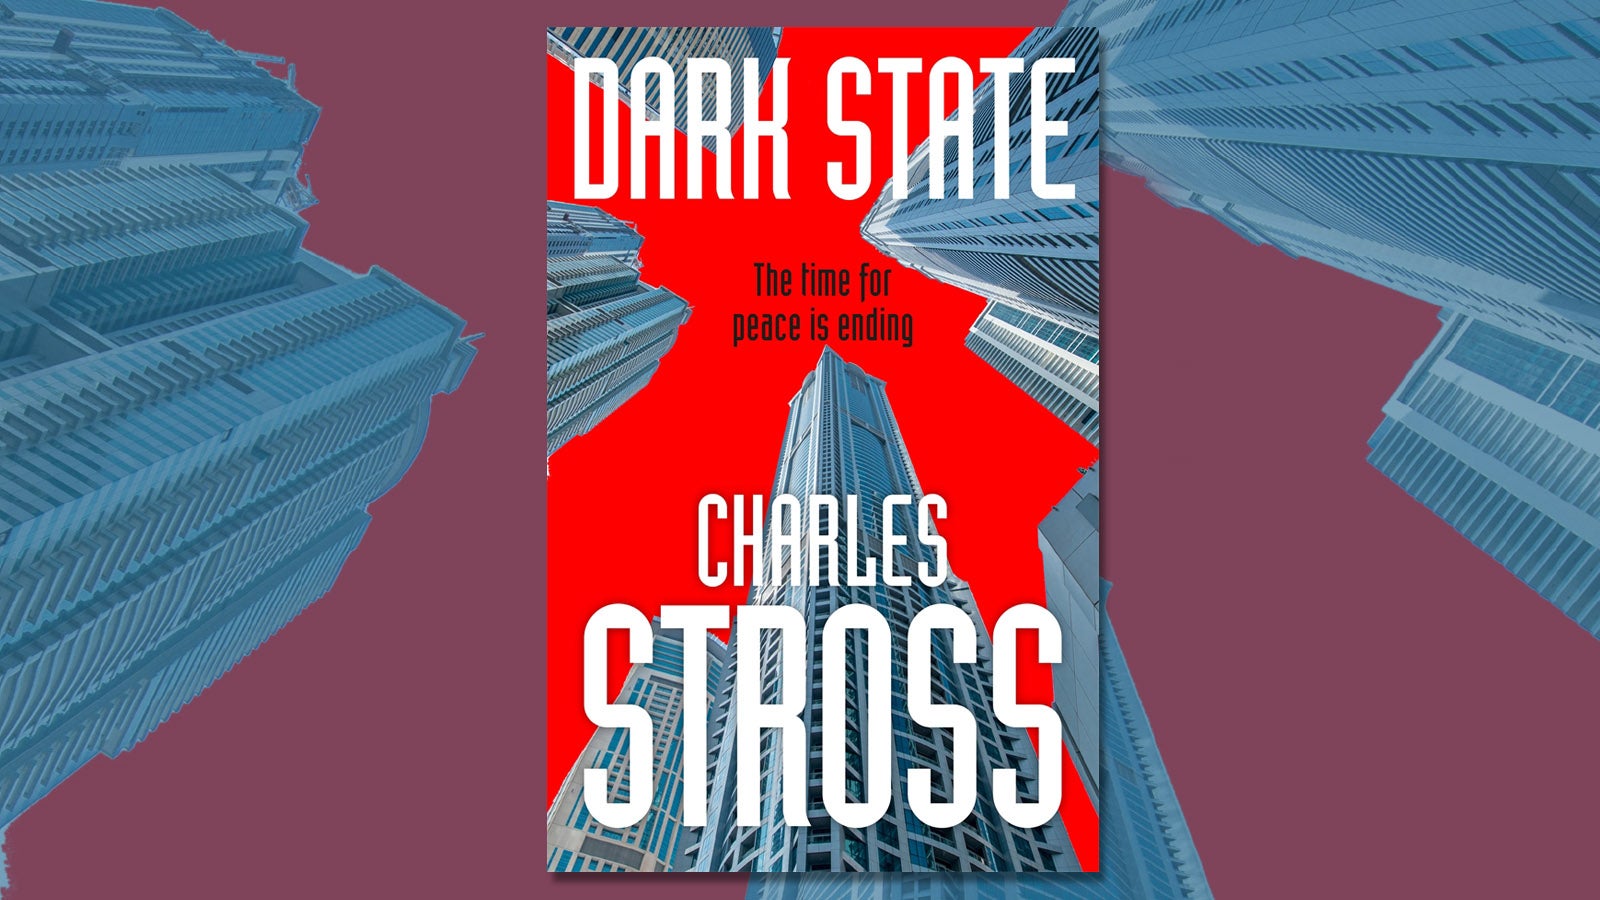 charles-stross-dark-state-book-empire-games (1).jpg